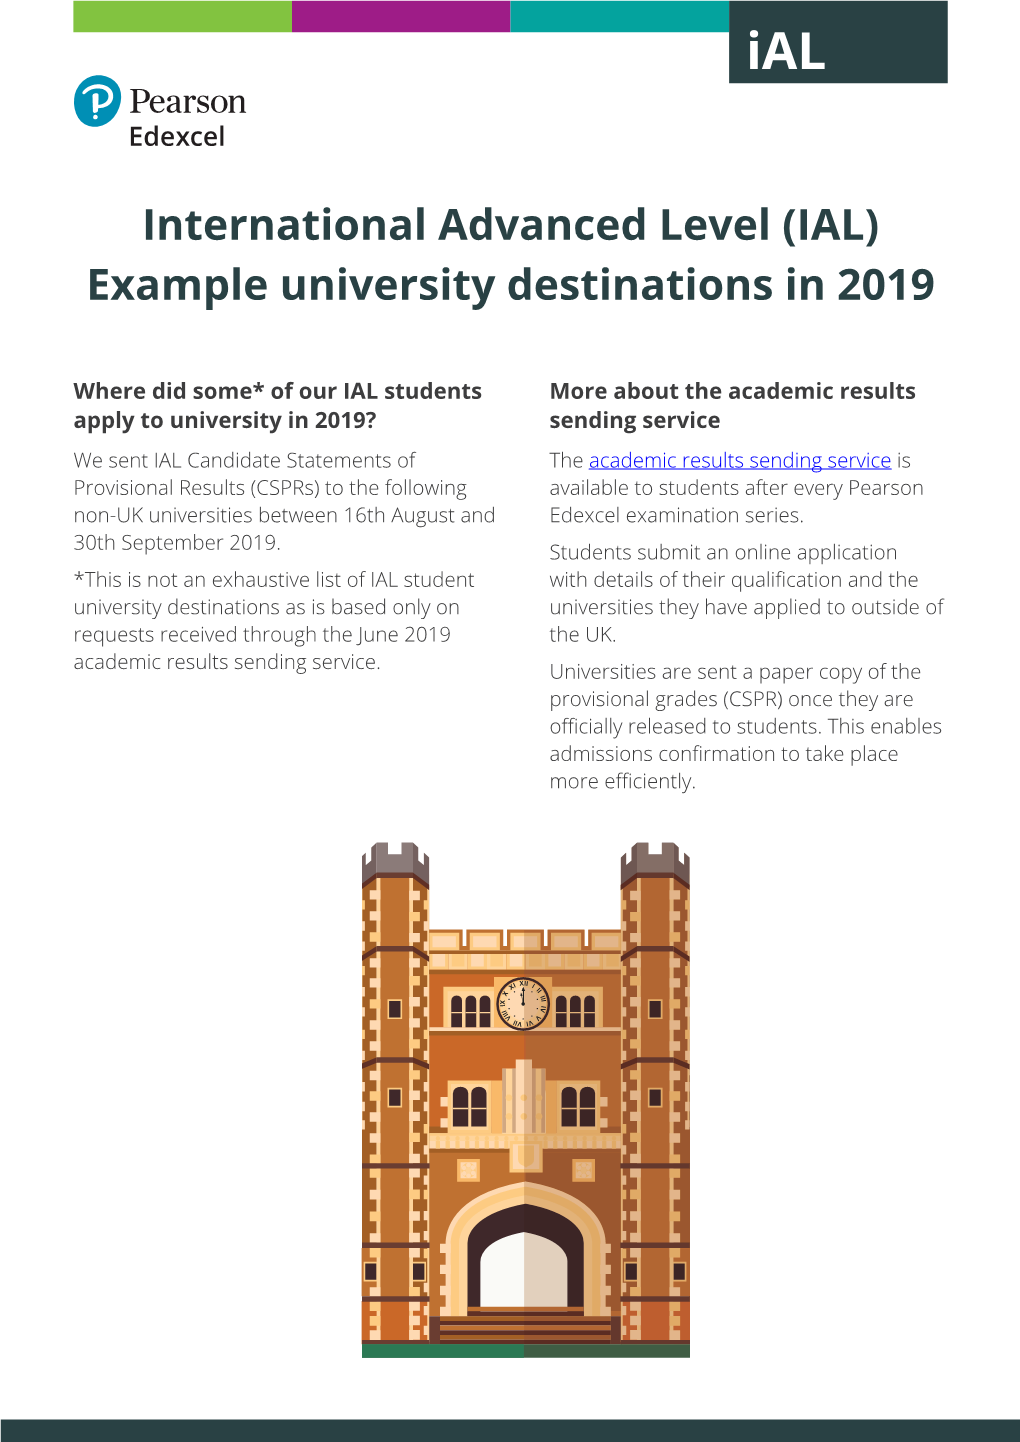 International Advanced Level (IAL) Example University Destinations in 2019